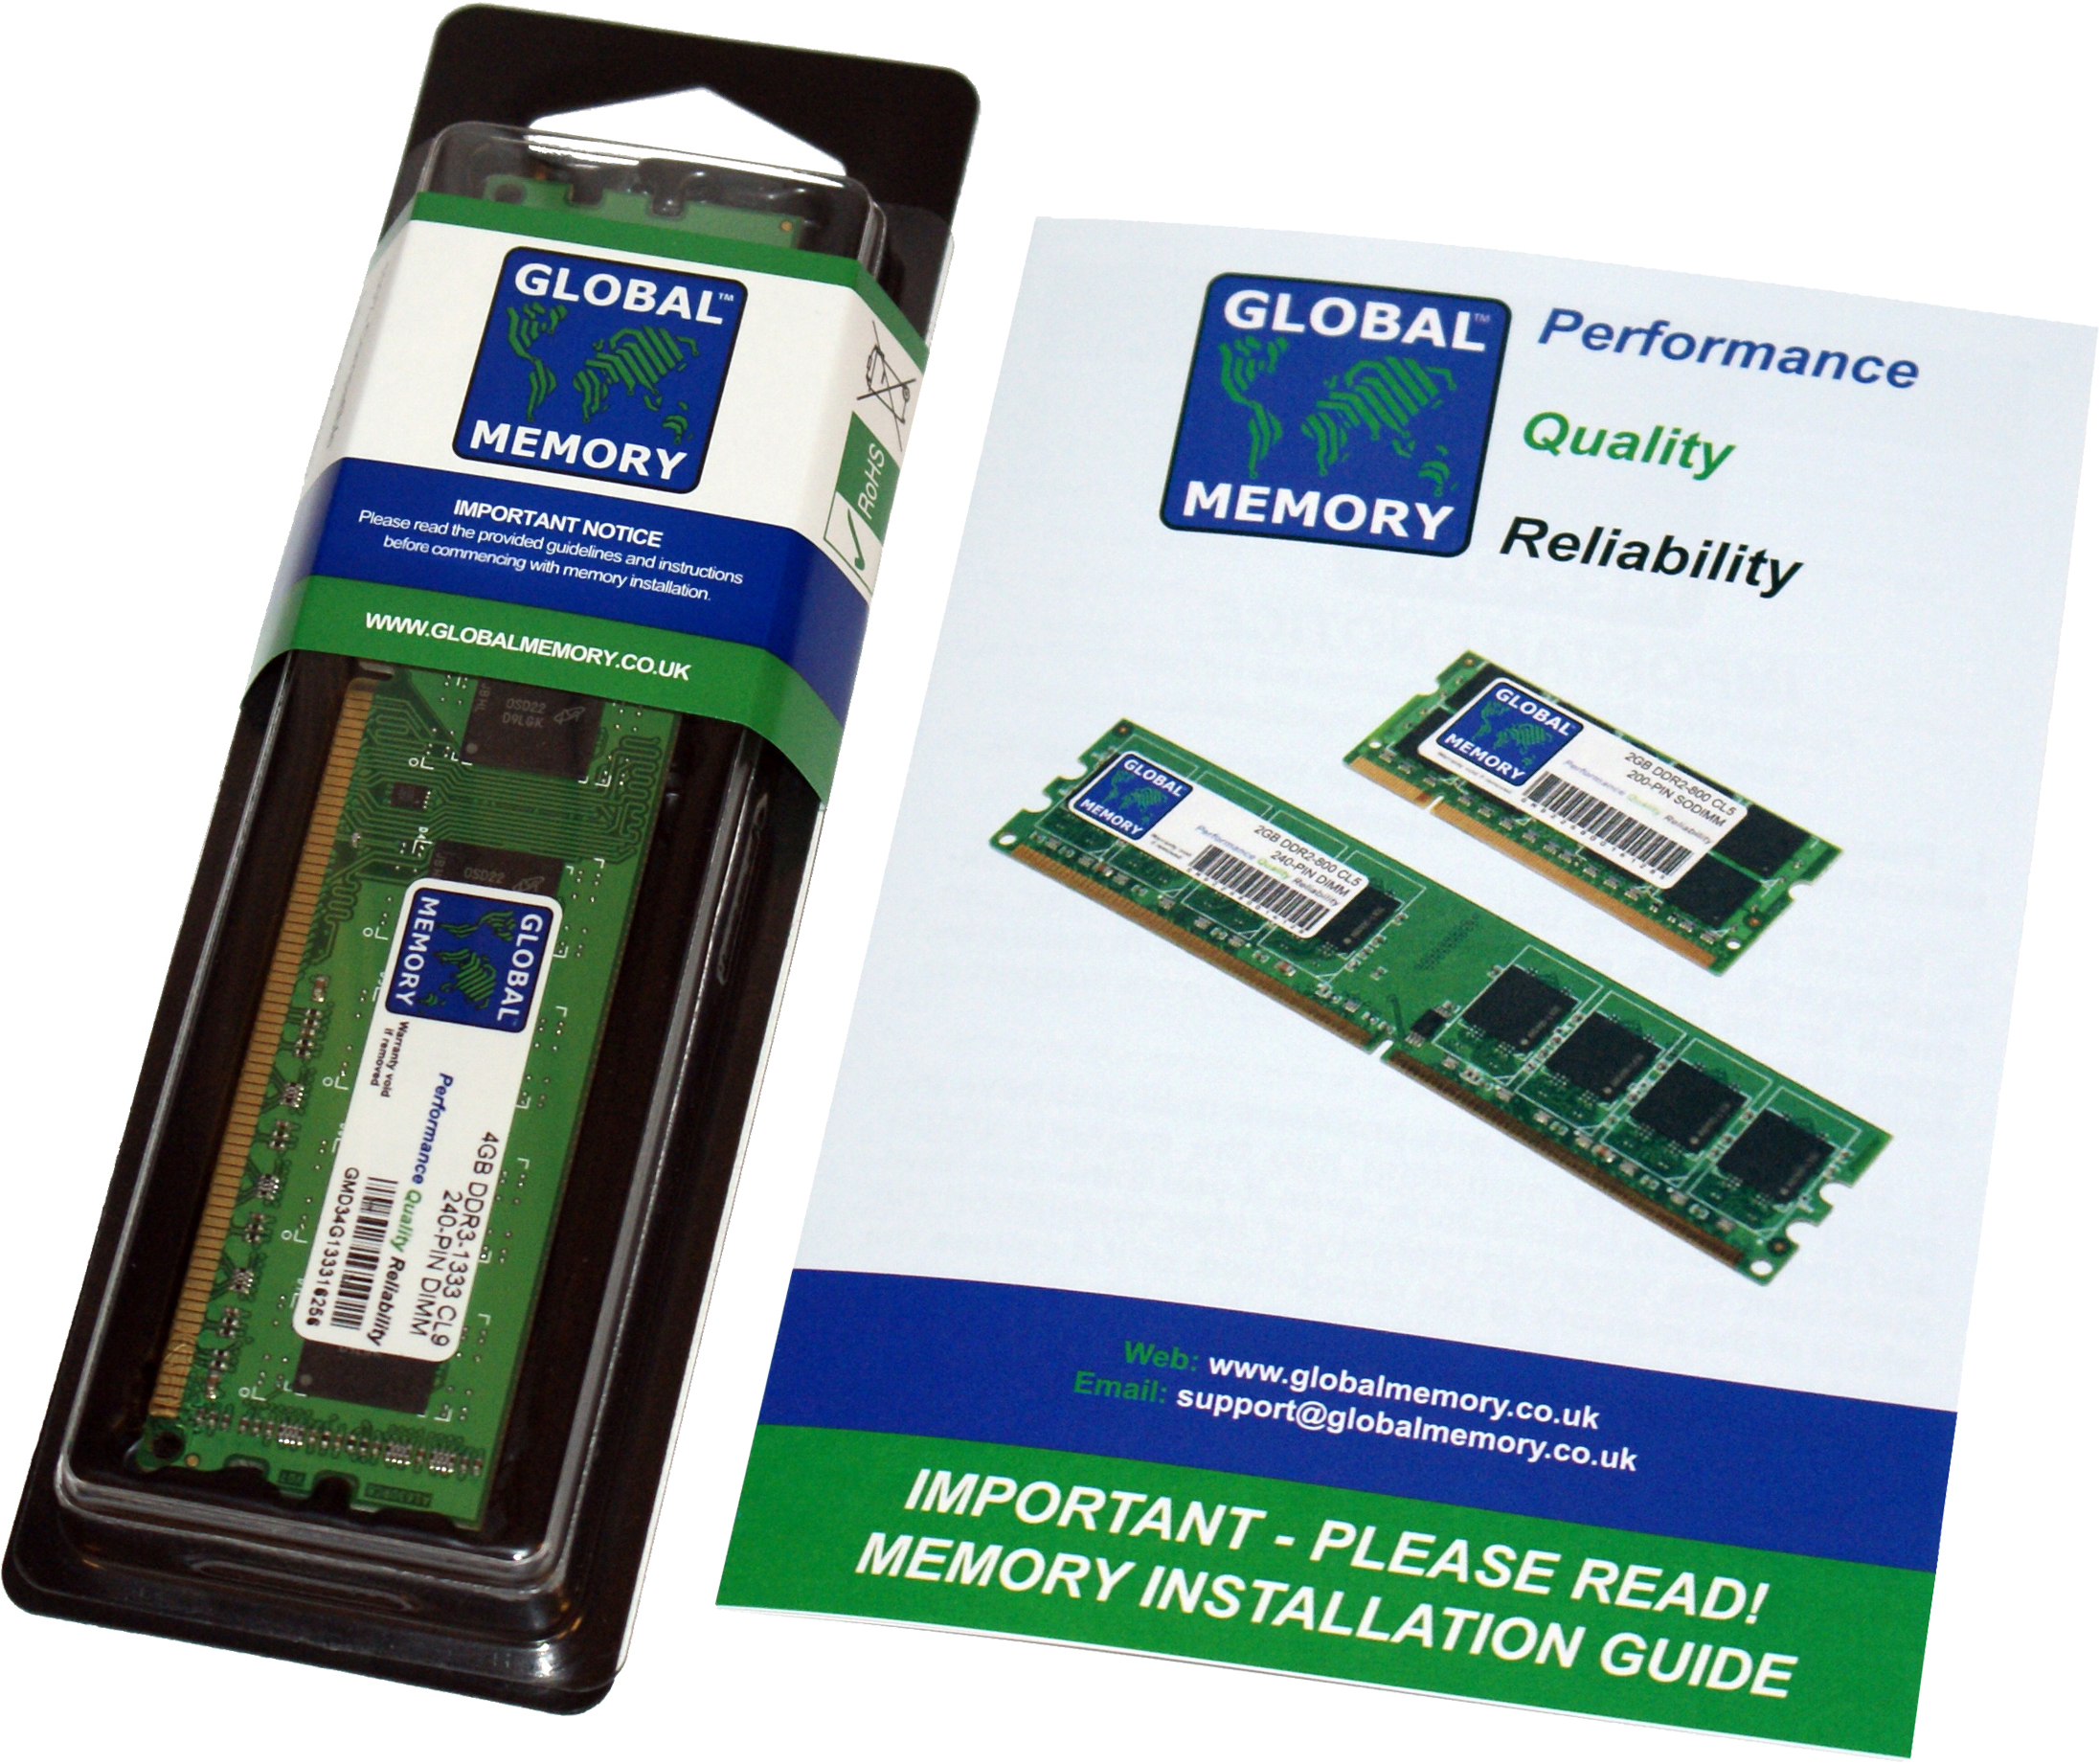 4GB DDR4 2933MHz PC4-23400 288-PIN DIMM MEMORY RAM FOR HEWLETT-PACKARD PC DESKTOPS